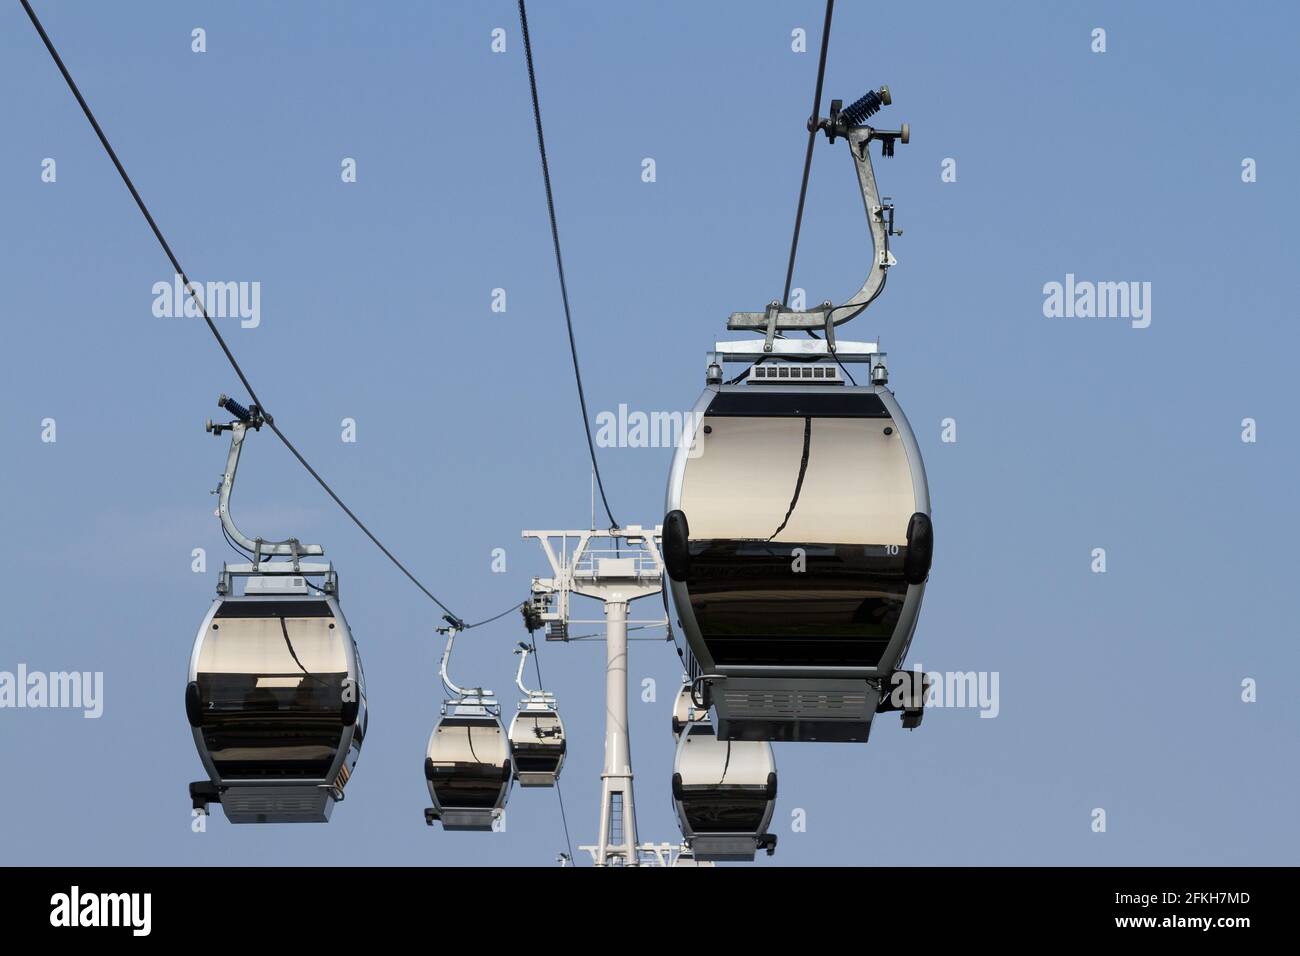 Gondolas on the Yokohama Air Cabin in Minato Mirai, Yokohama, Japan. Stock Photo